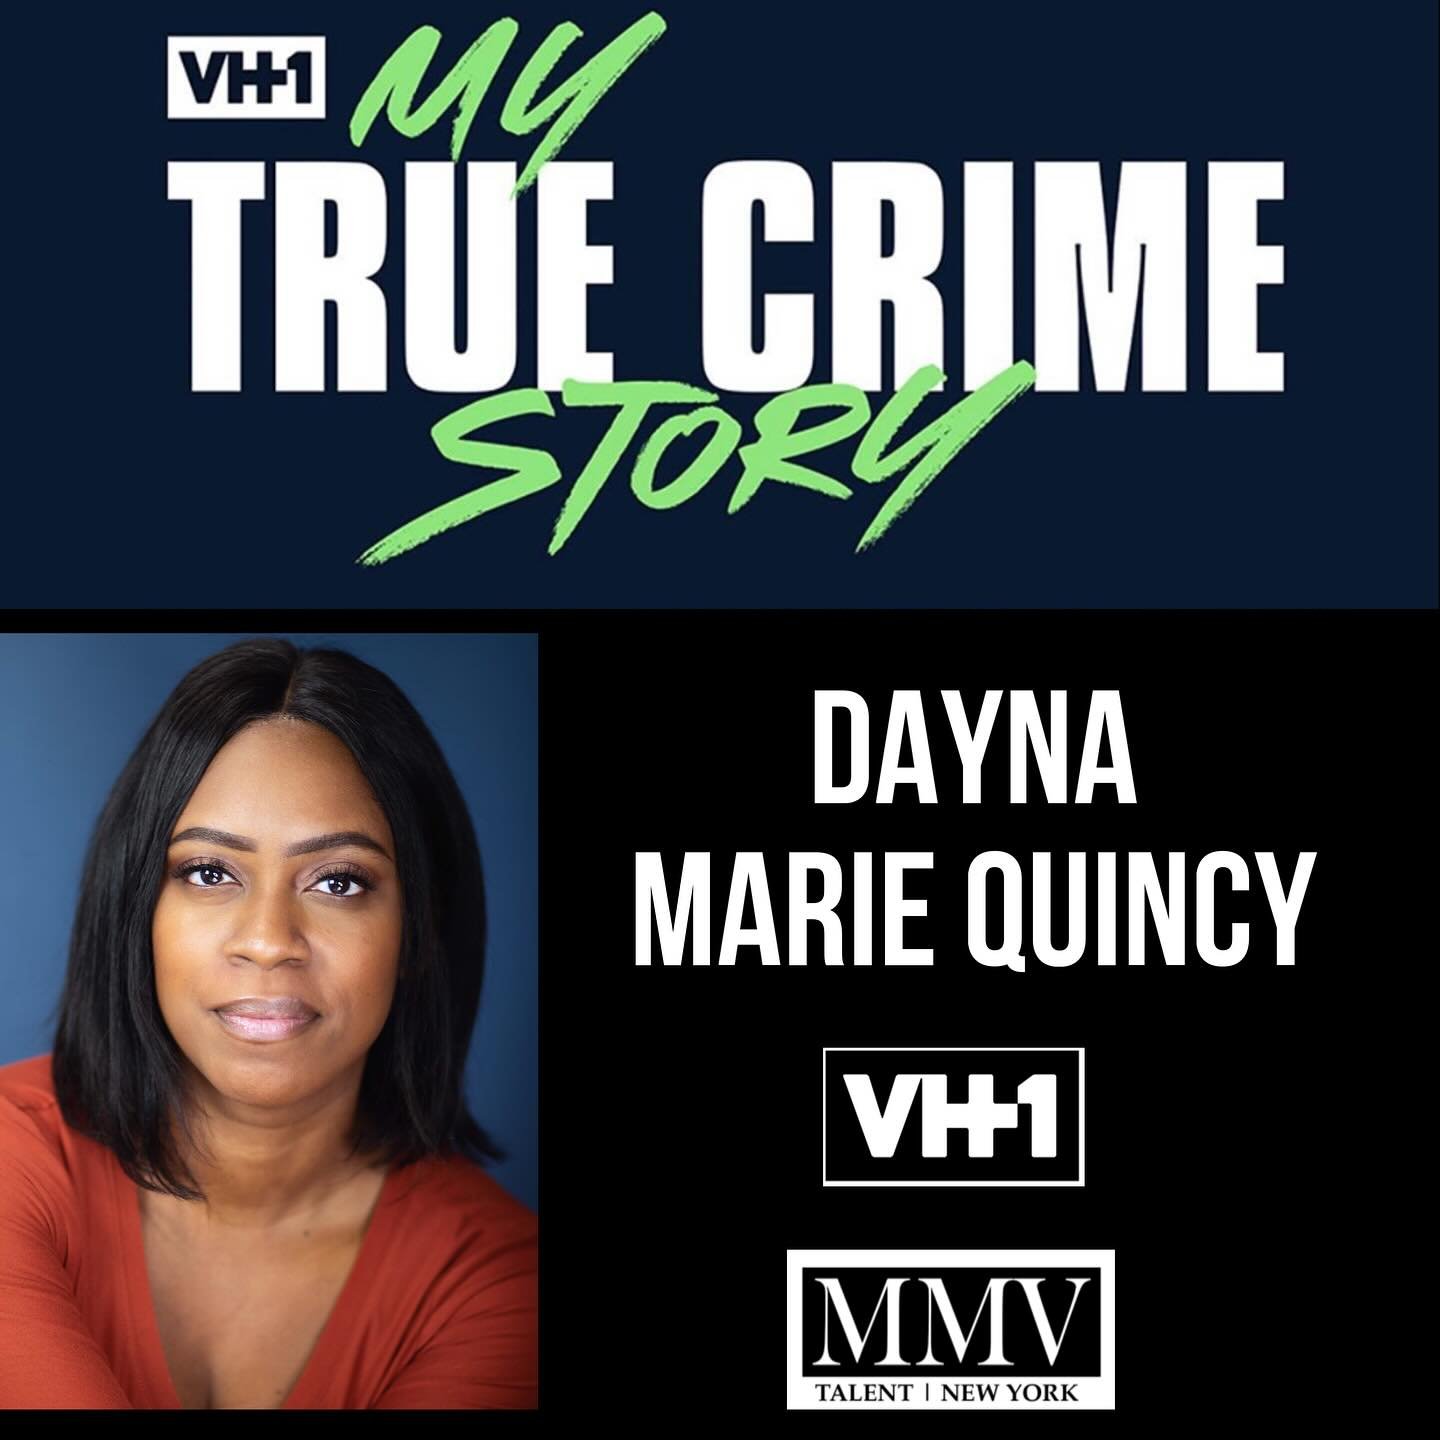 DAYNA MARIE QUINCY as Demetria Harrison in My True Crime Story. ➡️Swipe to see a clip! 🤩
@daynamariequincy 

#mmvtalent